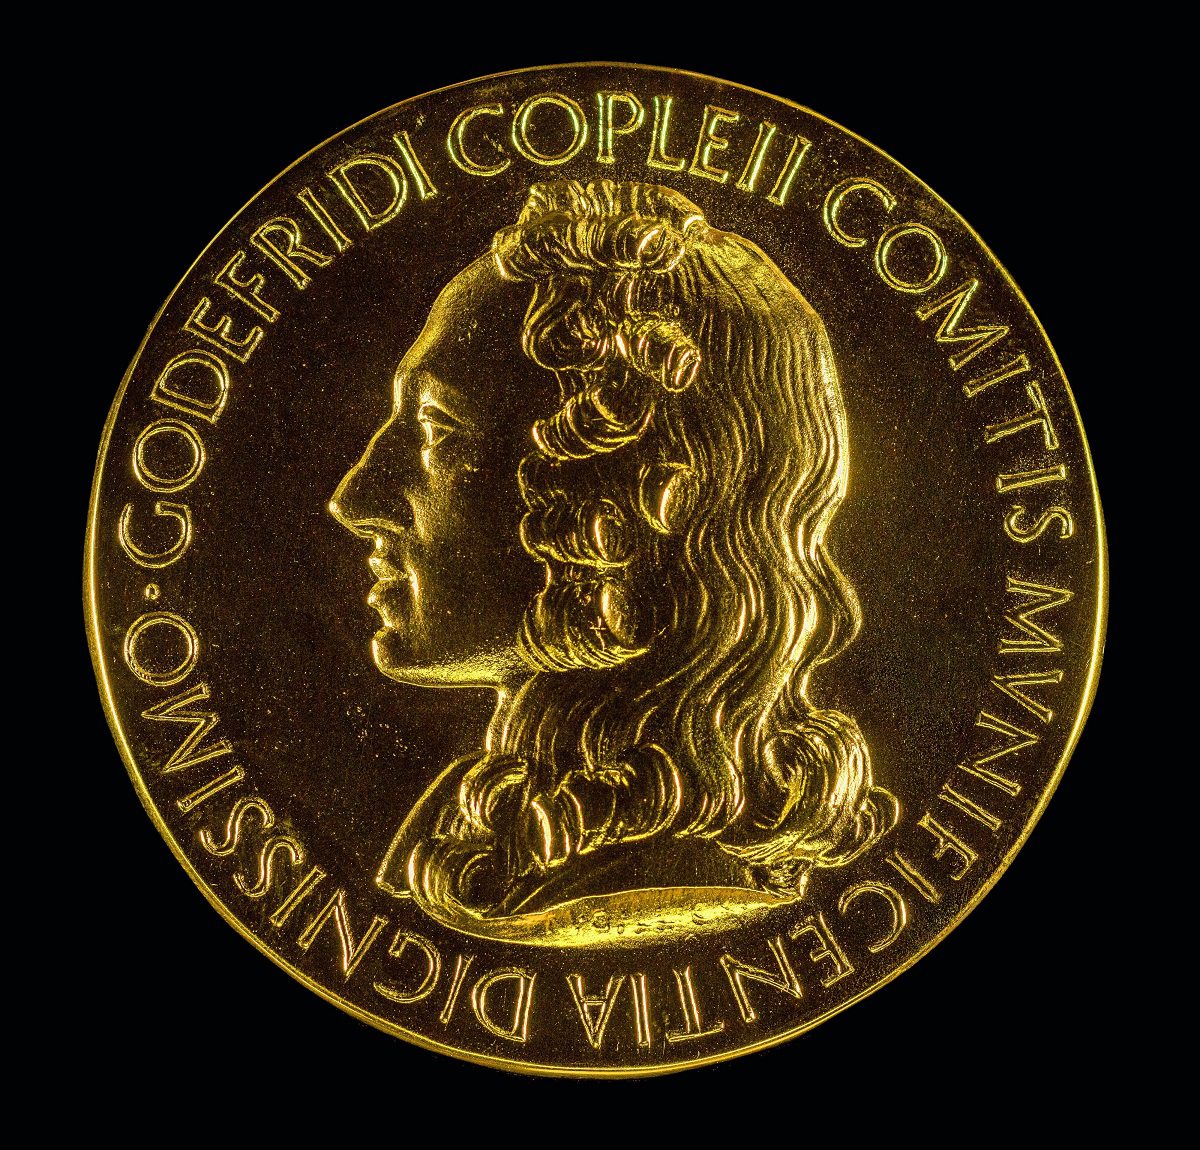 The Royal Society's Copley Medal